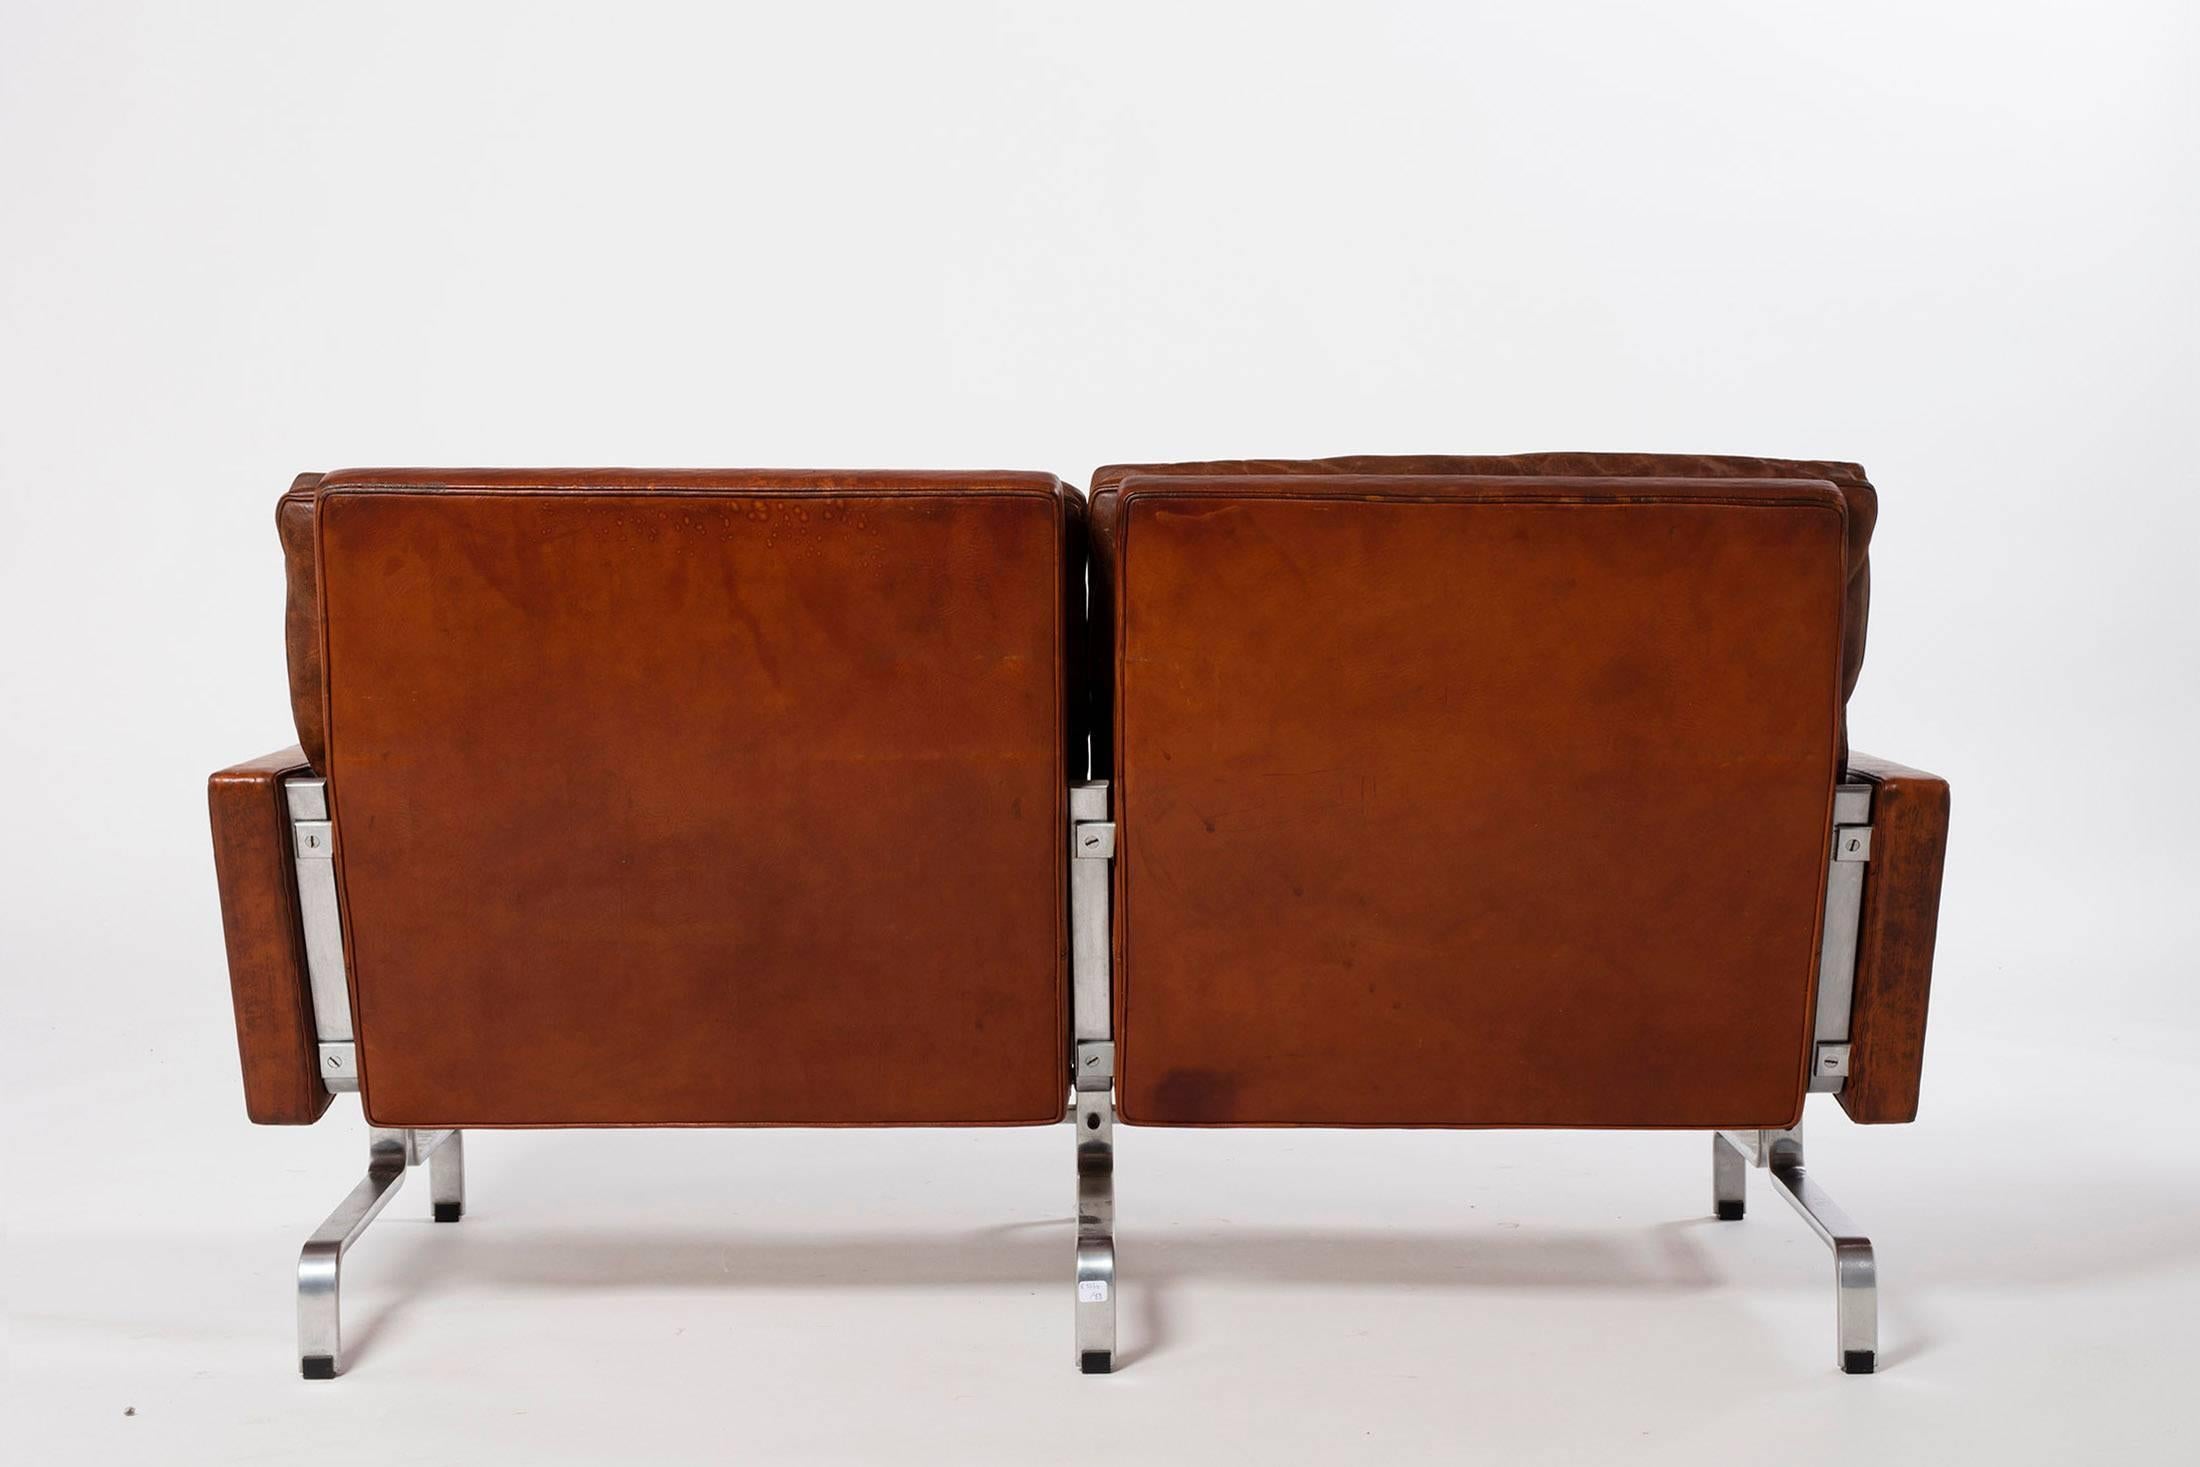 Two-seat PK 31/2 original brown leather sofa designed by Poul Kjærholm for E. Kold Christensen in Denmark in 1960s.